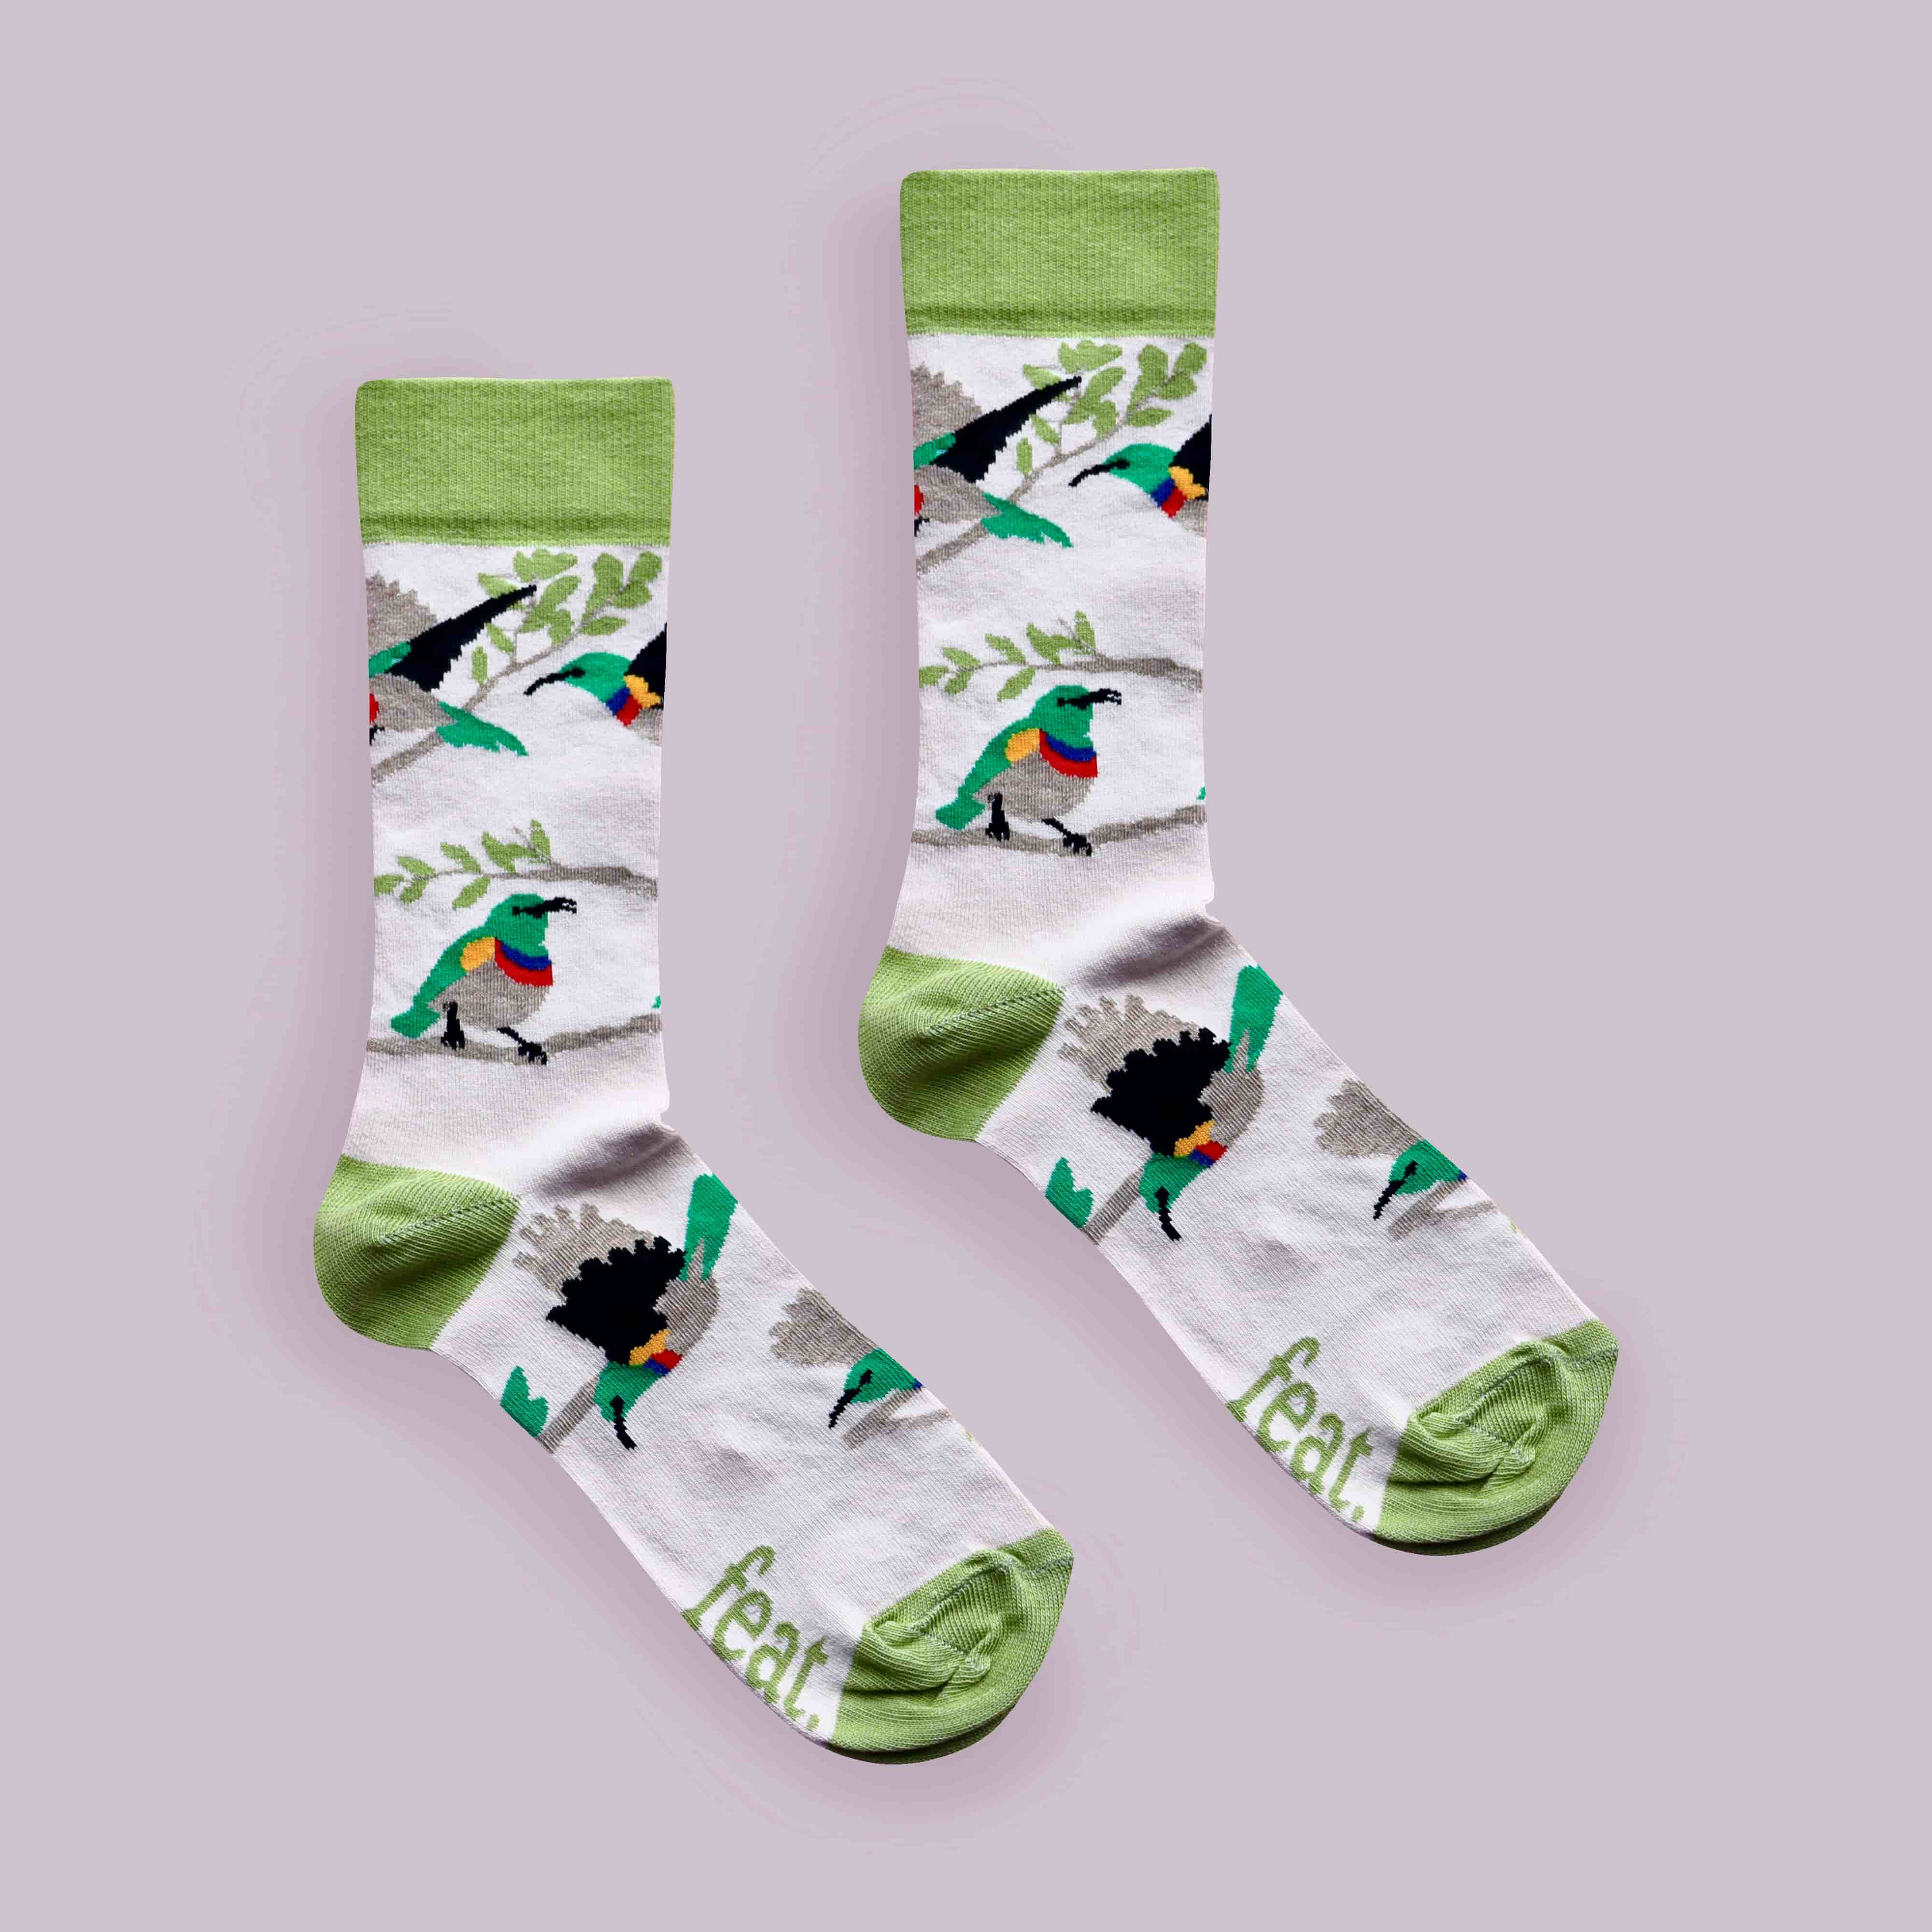 Sunbird socks made in South Africa